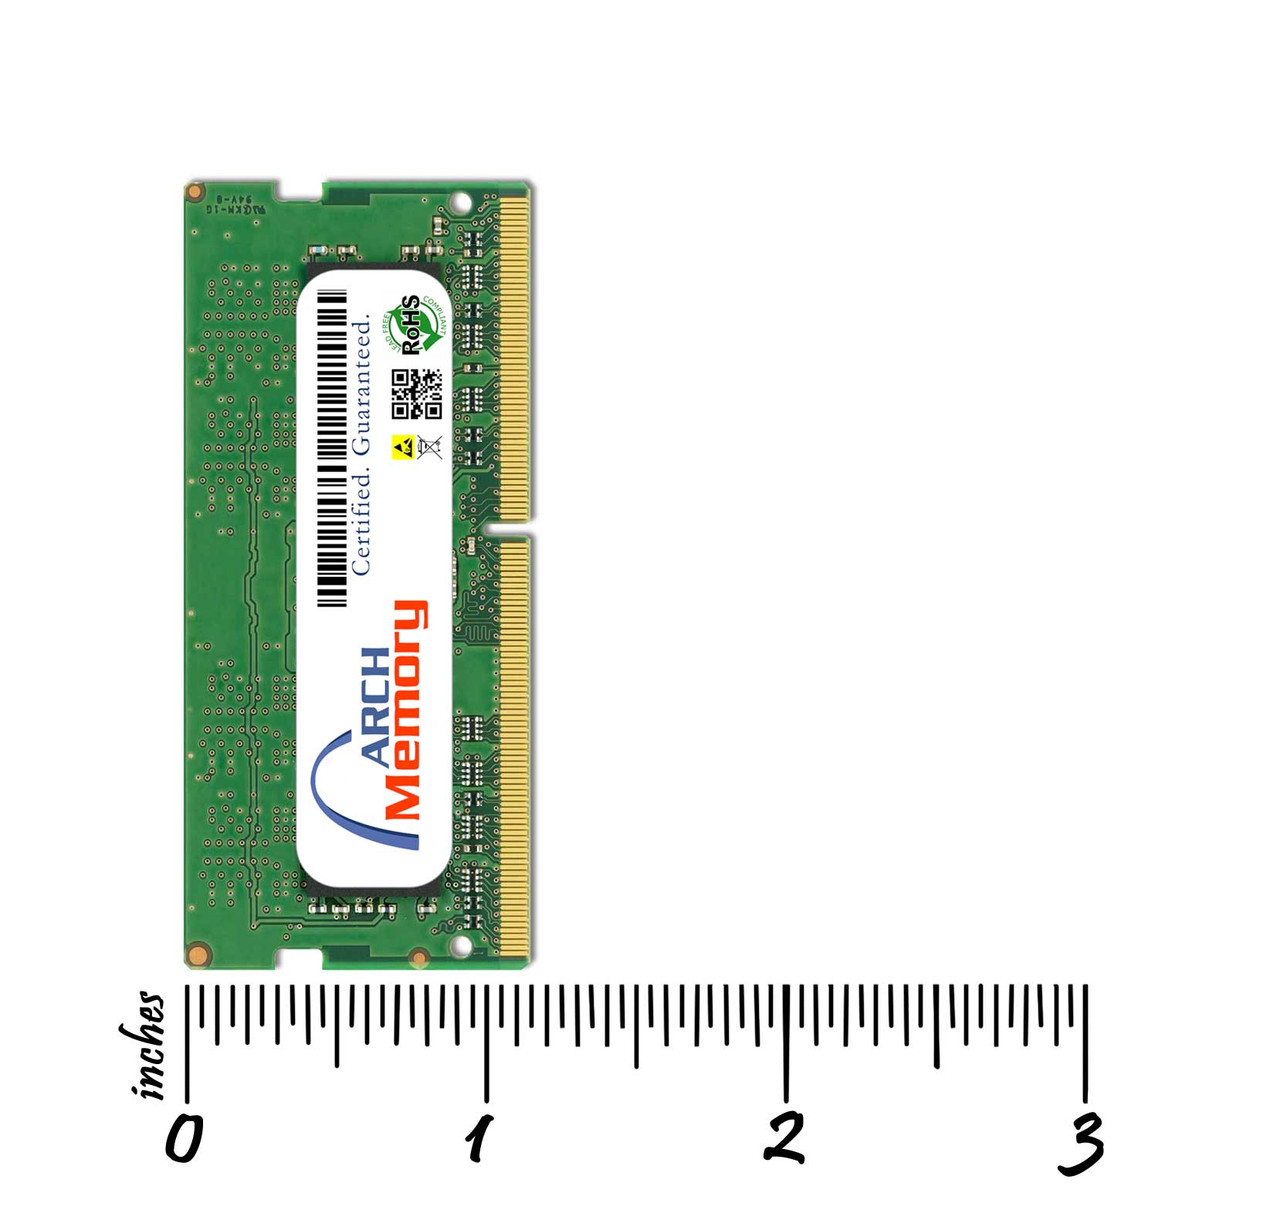 16GB Kit MUQN2G/A (2 x 8GB) 260-Pin DDR4 So-dimm RAM | Memory for Apple